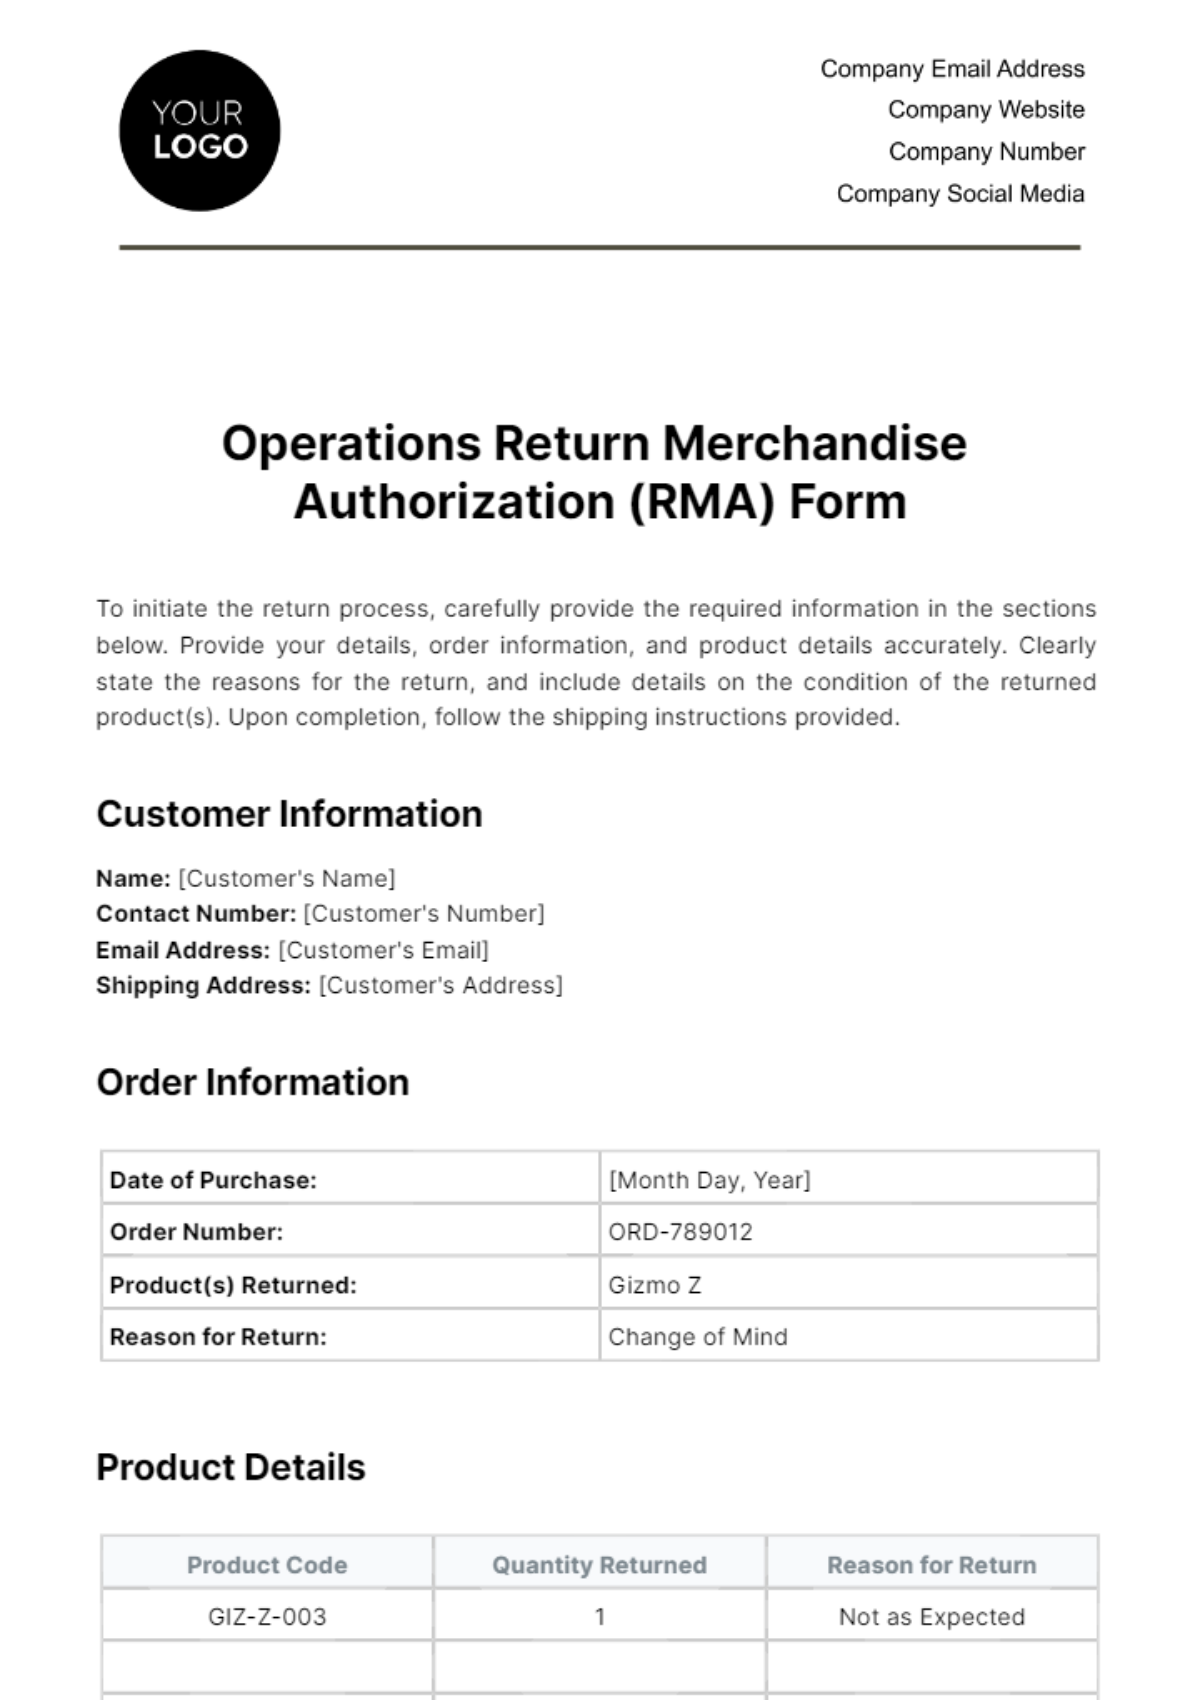 Operations Return Merchandise Authorization (RMA) Form Template